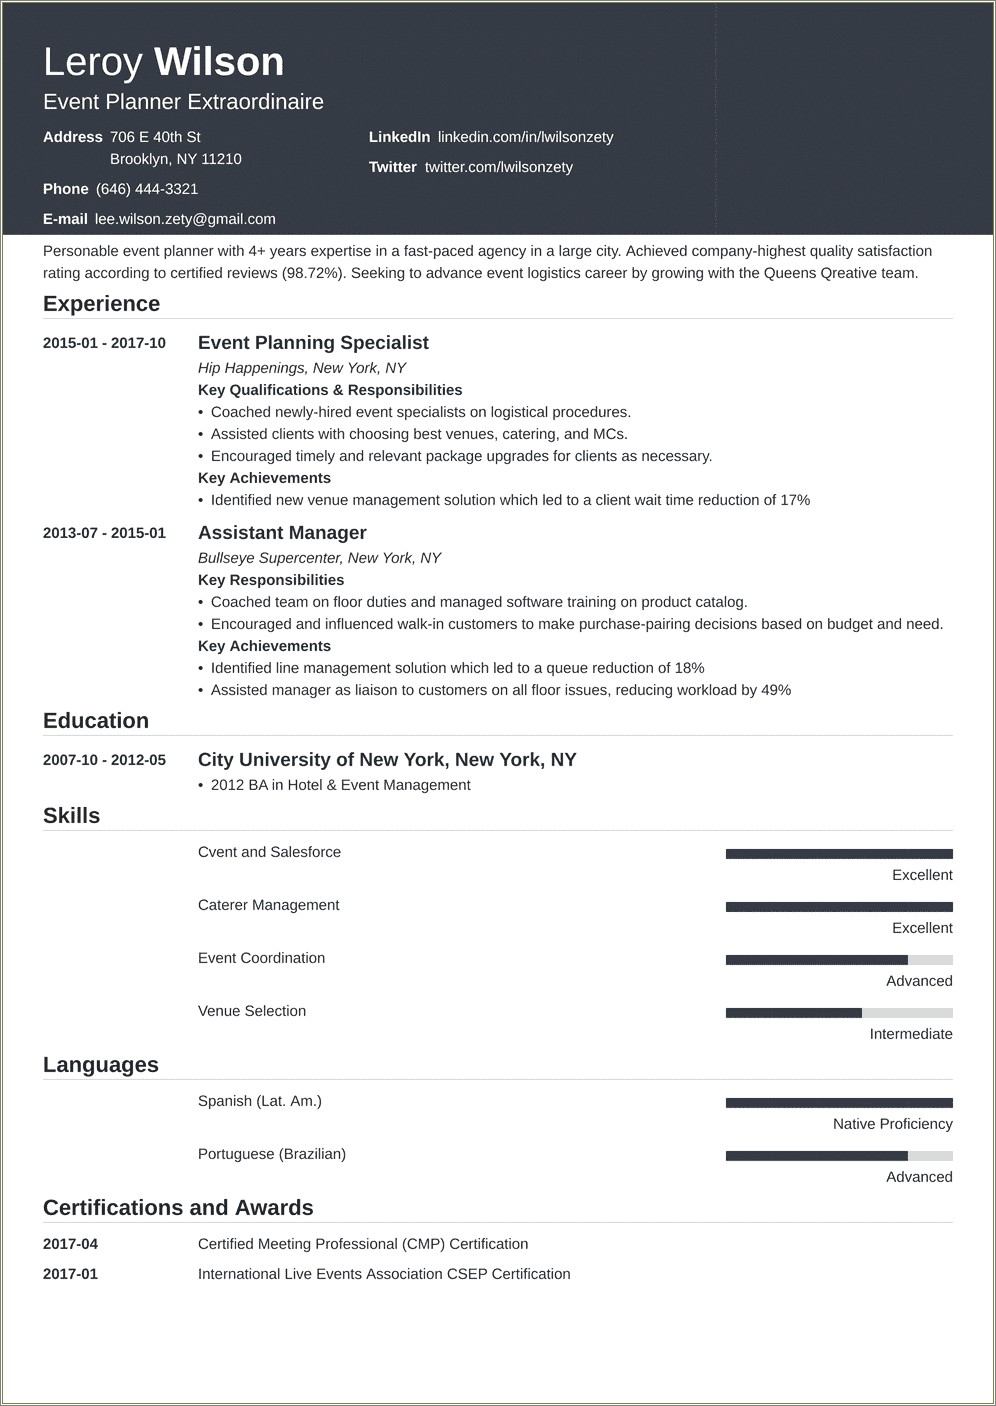 Resume Objective For Event Planner Internship